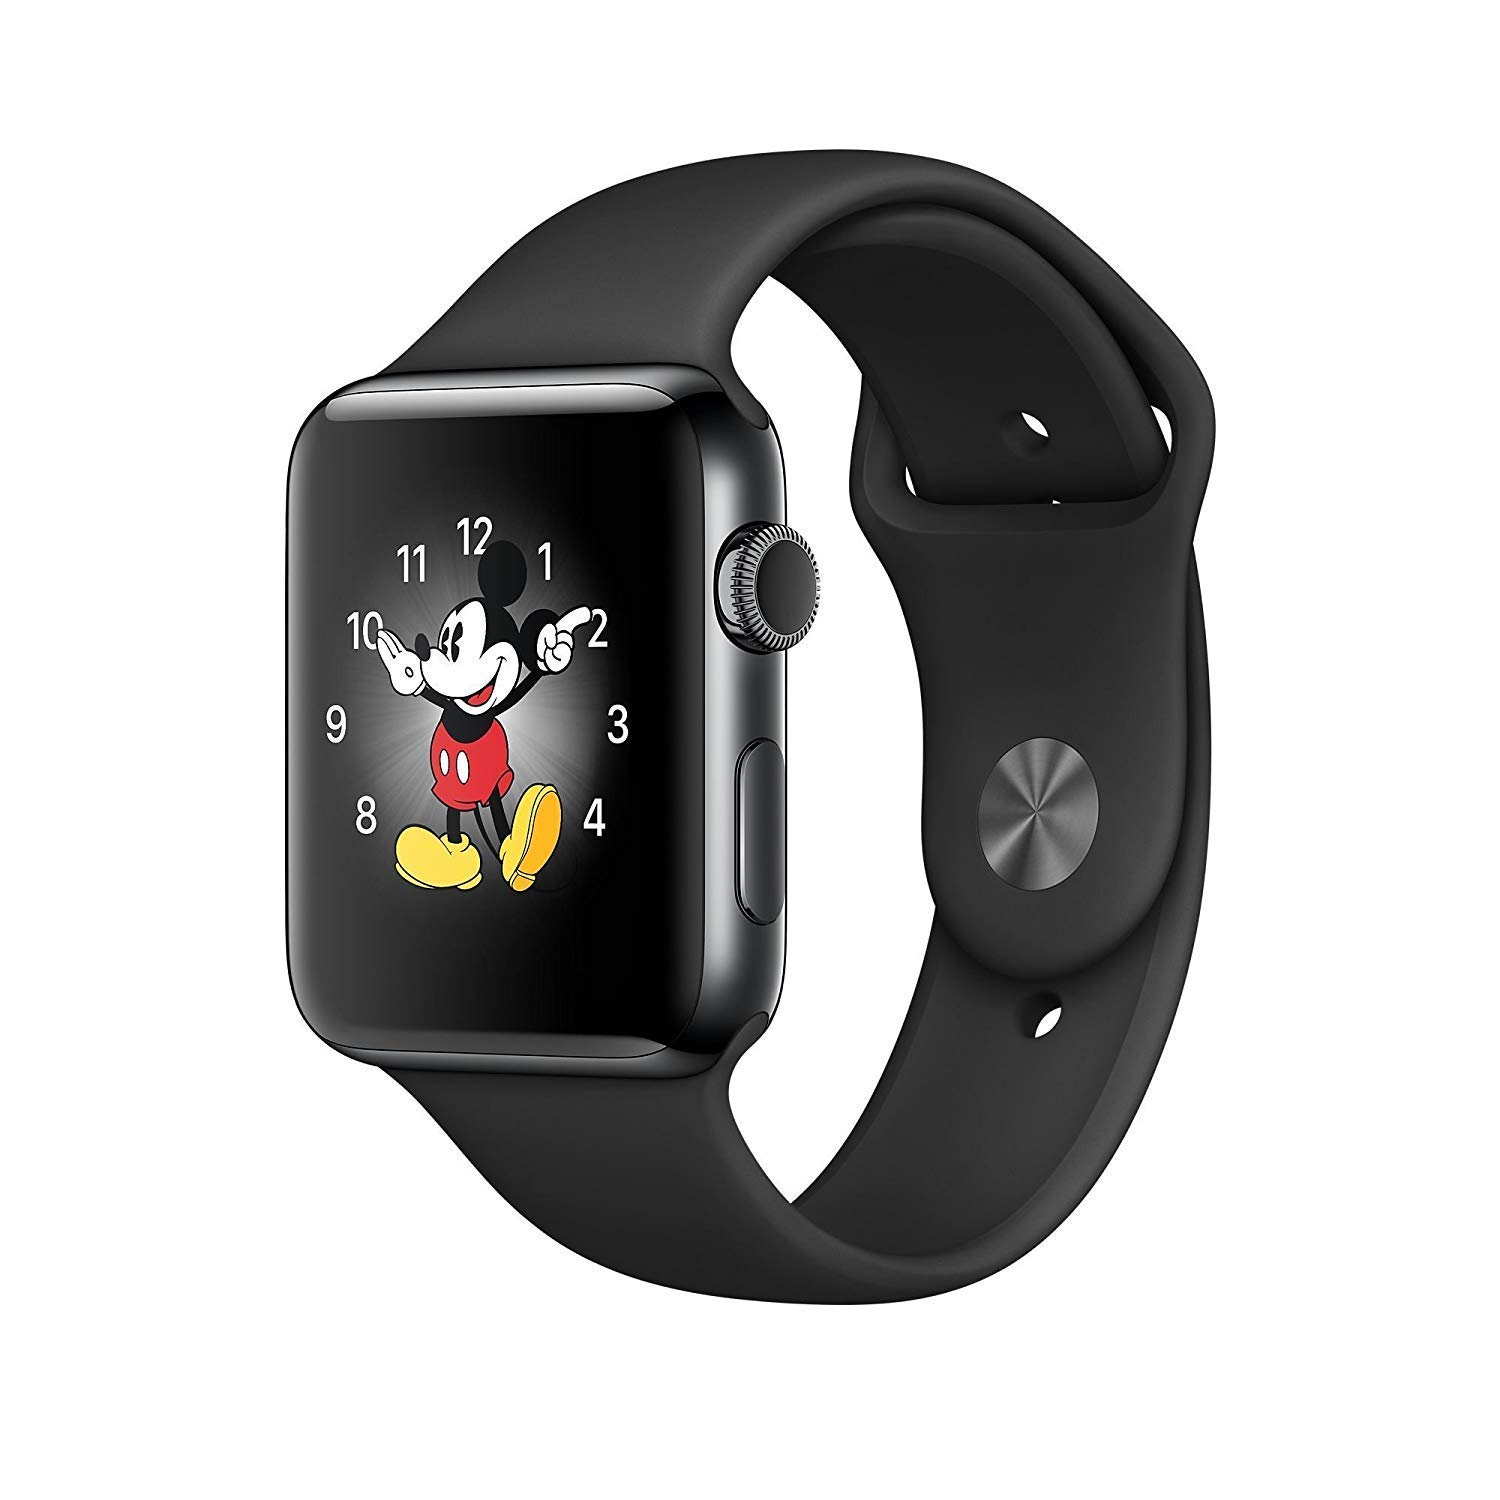 Apple Watch Series 3, 42 MM, GPS + Cellular, Space Black Stainless Steel Case, Black Sport Band (Renewed)